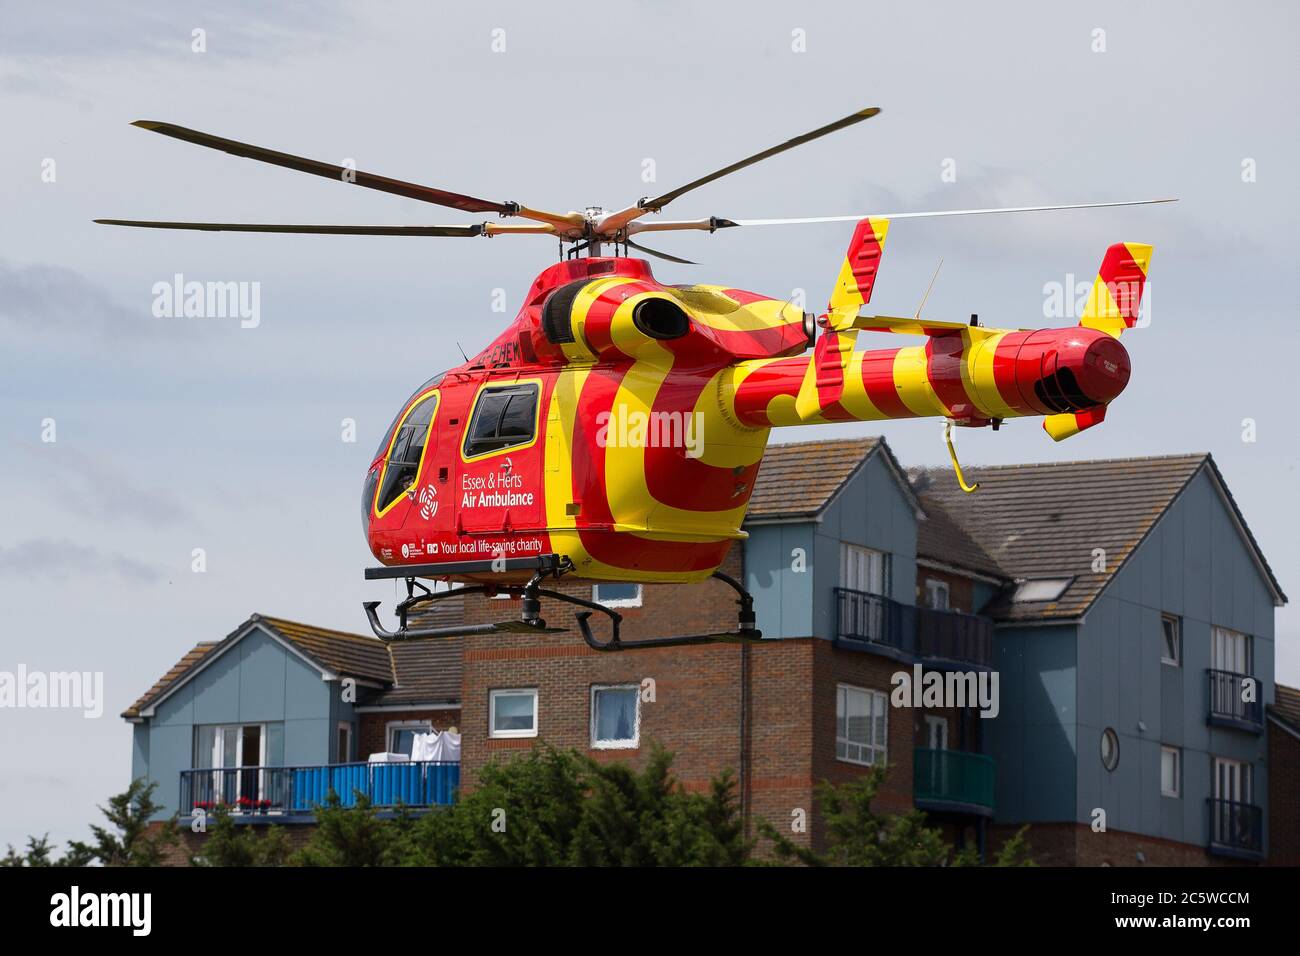 Air Ambulance, Essex and Herts, G-EHEM Stock Photo